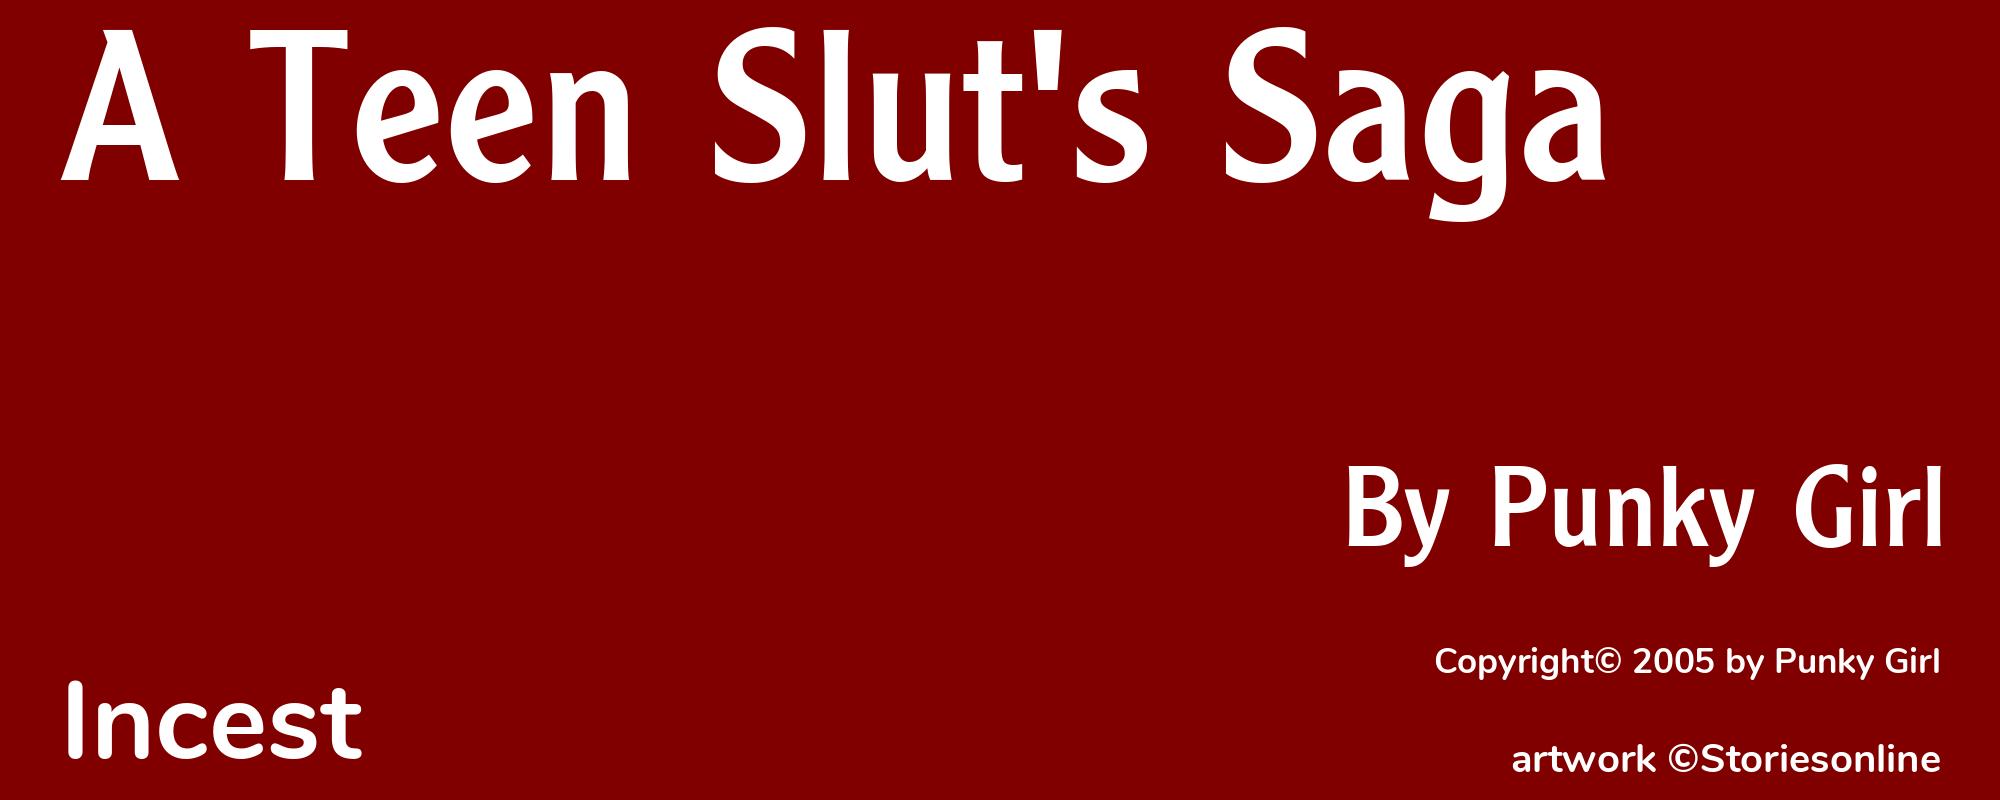 A Teen Slut's Saga - Cover